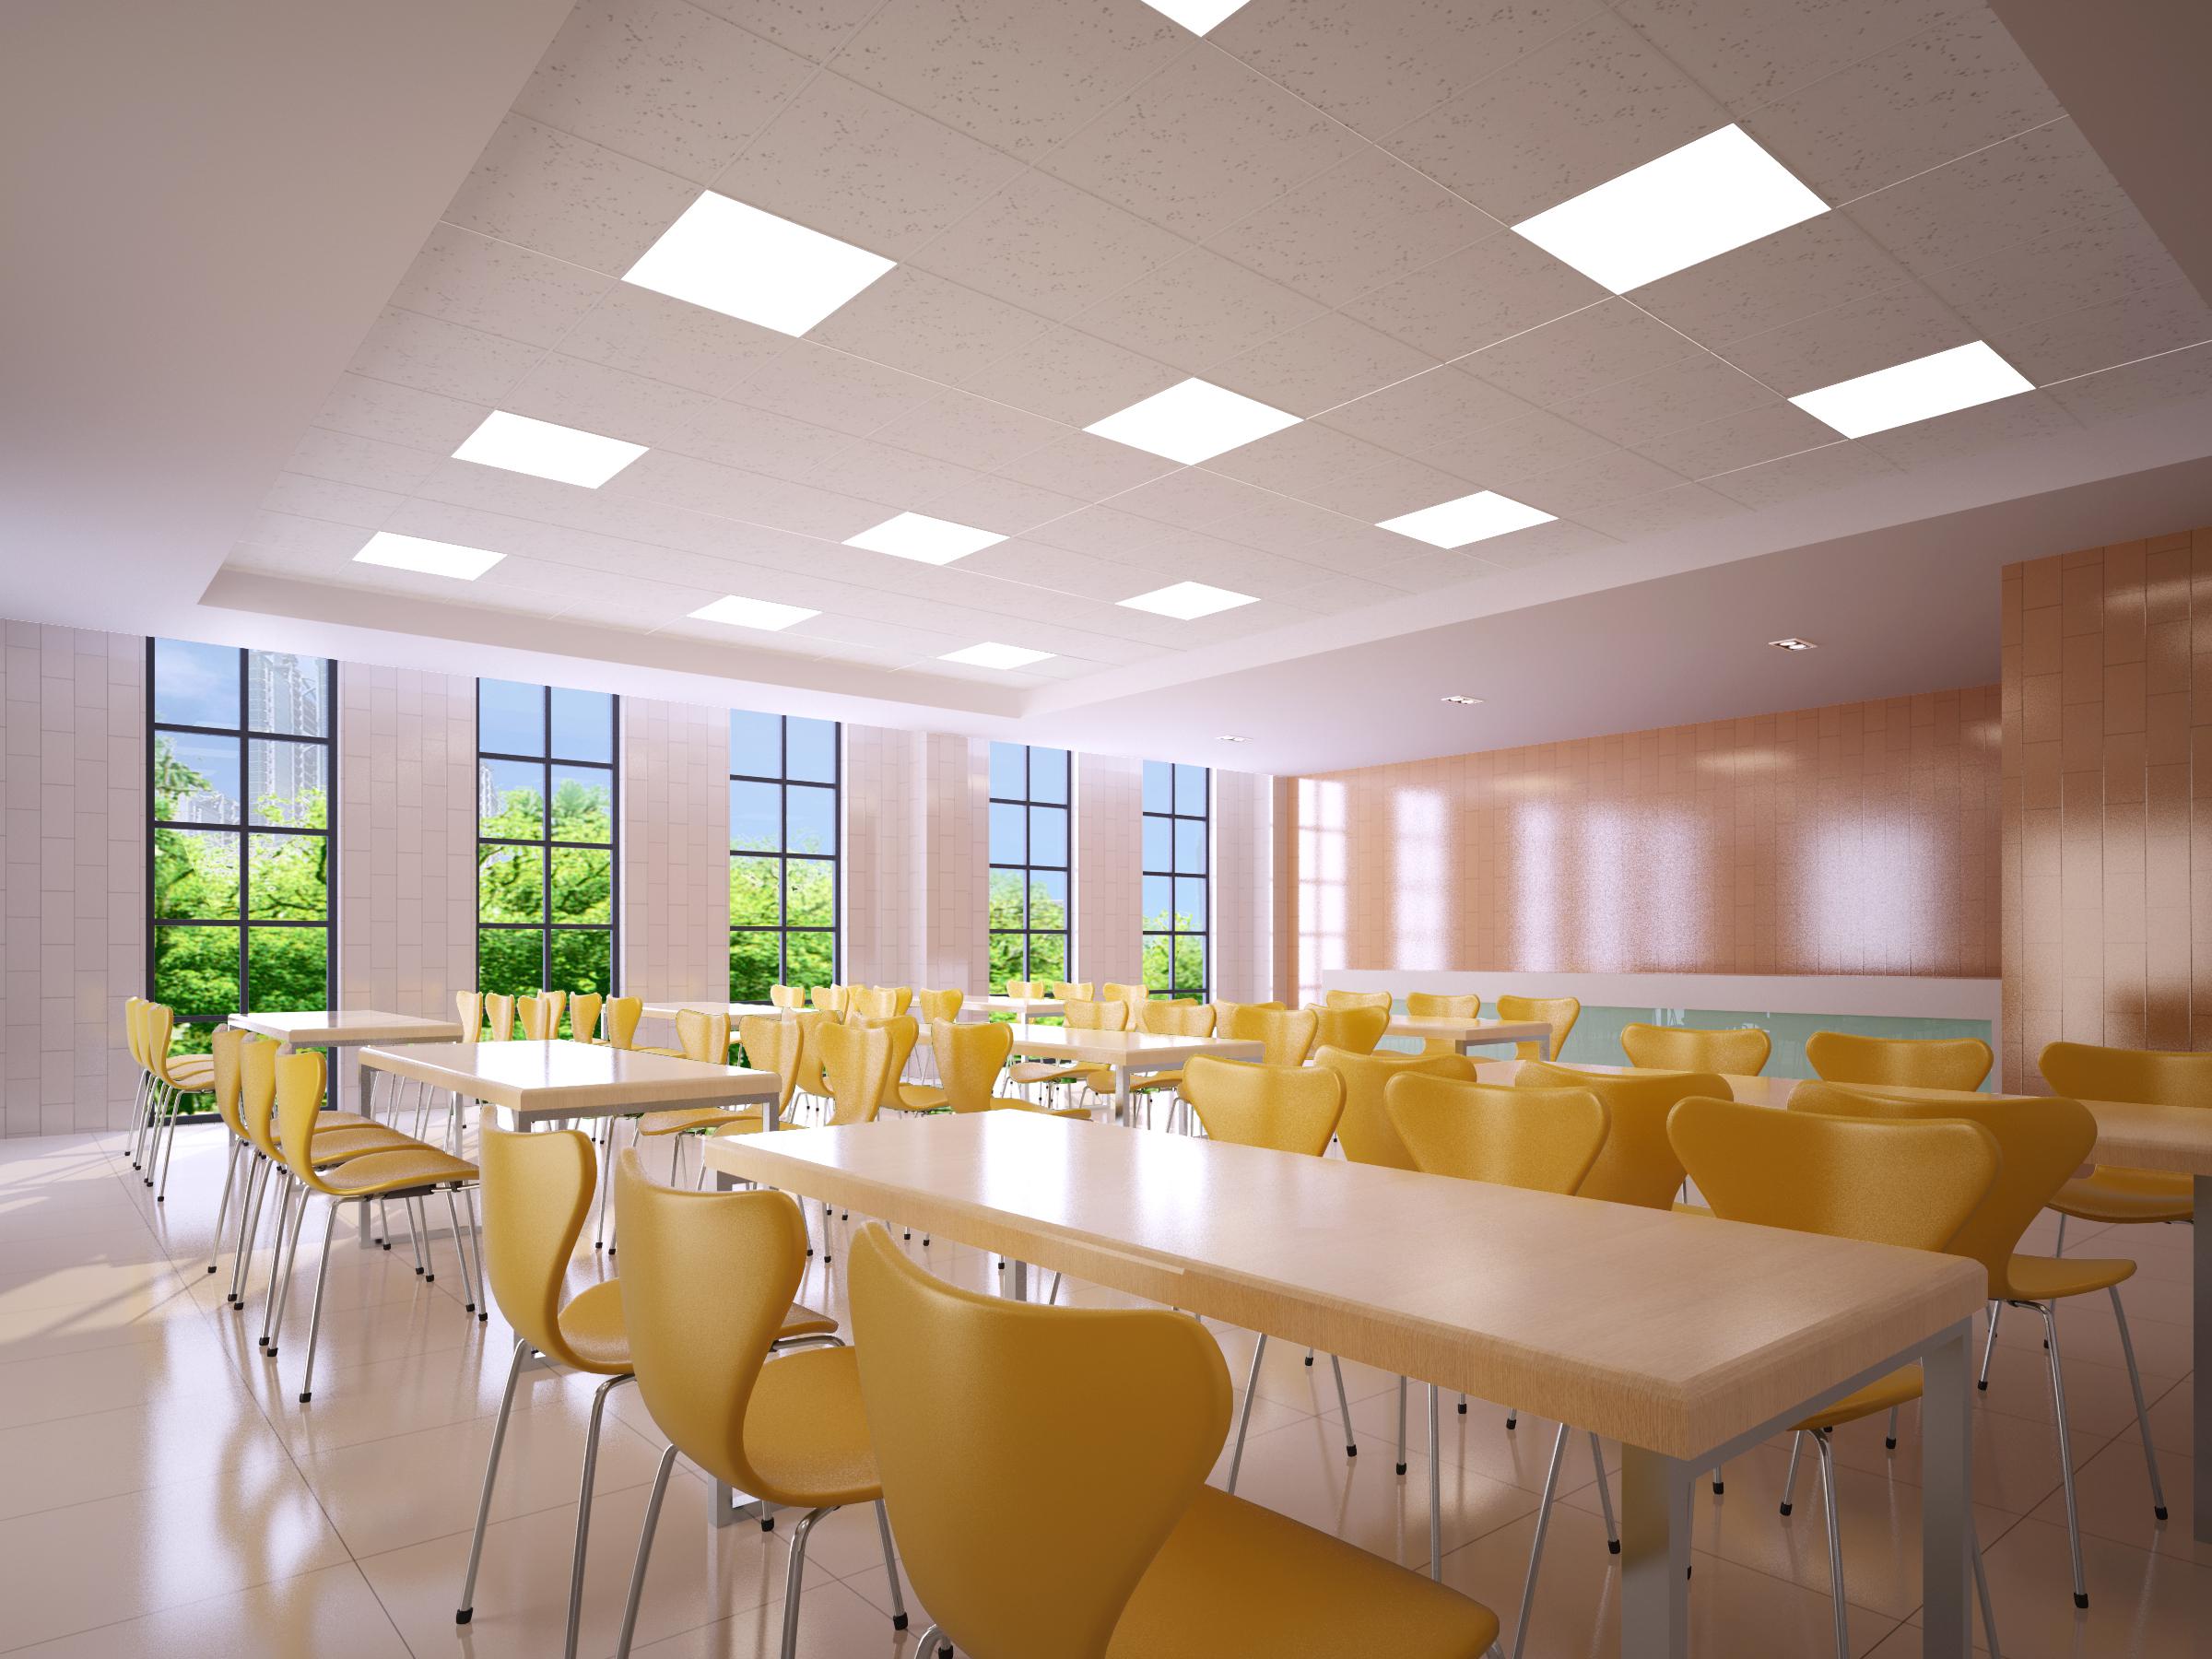 school interior ceiling led panel light